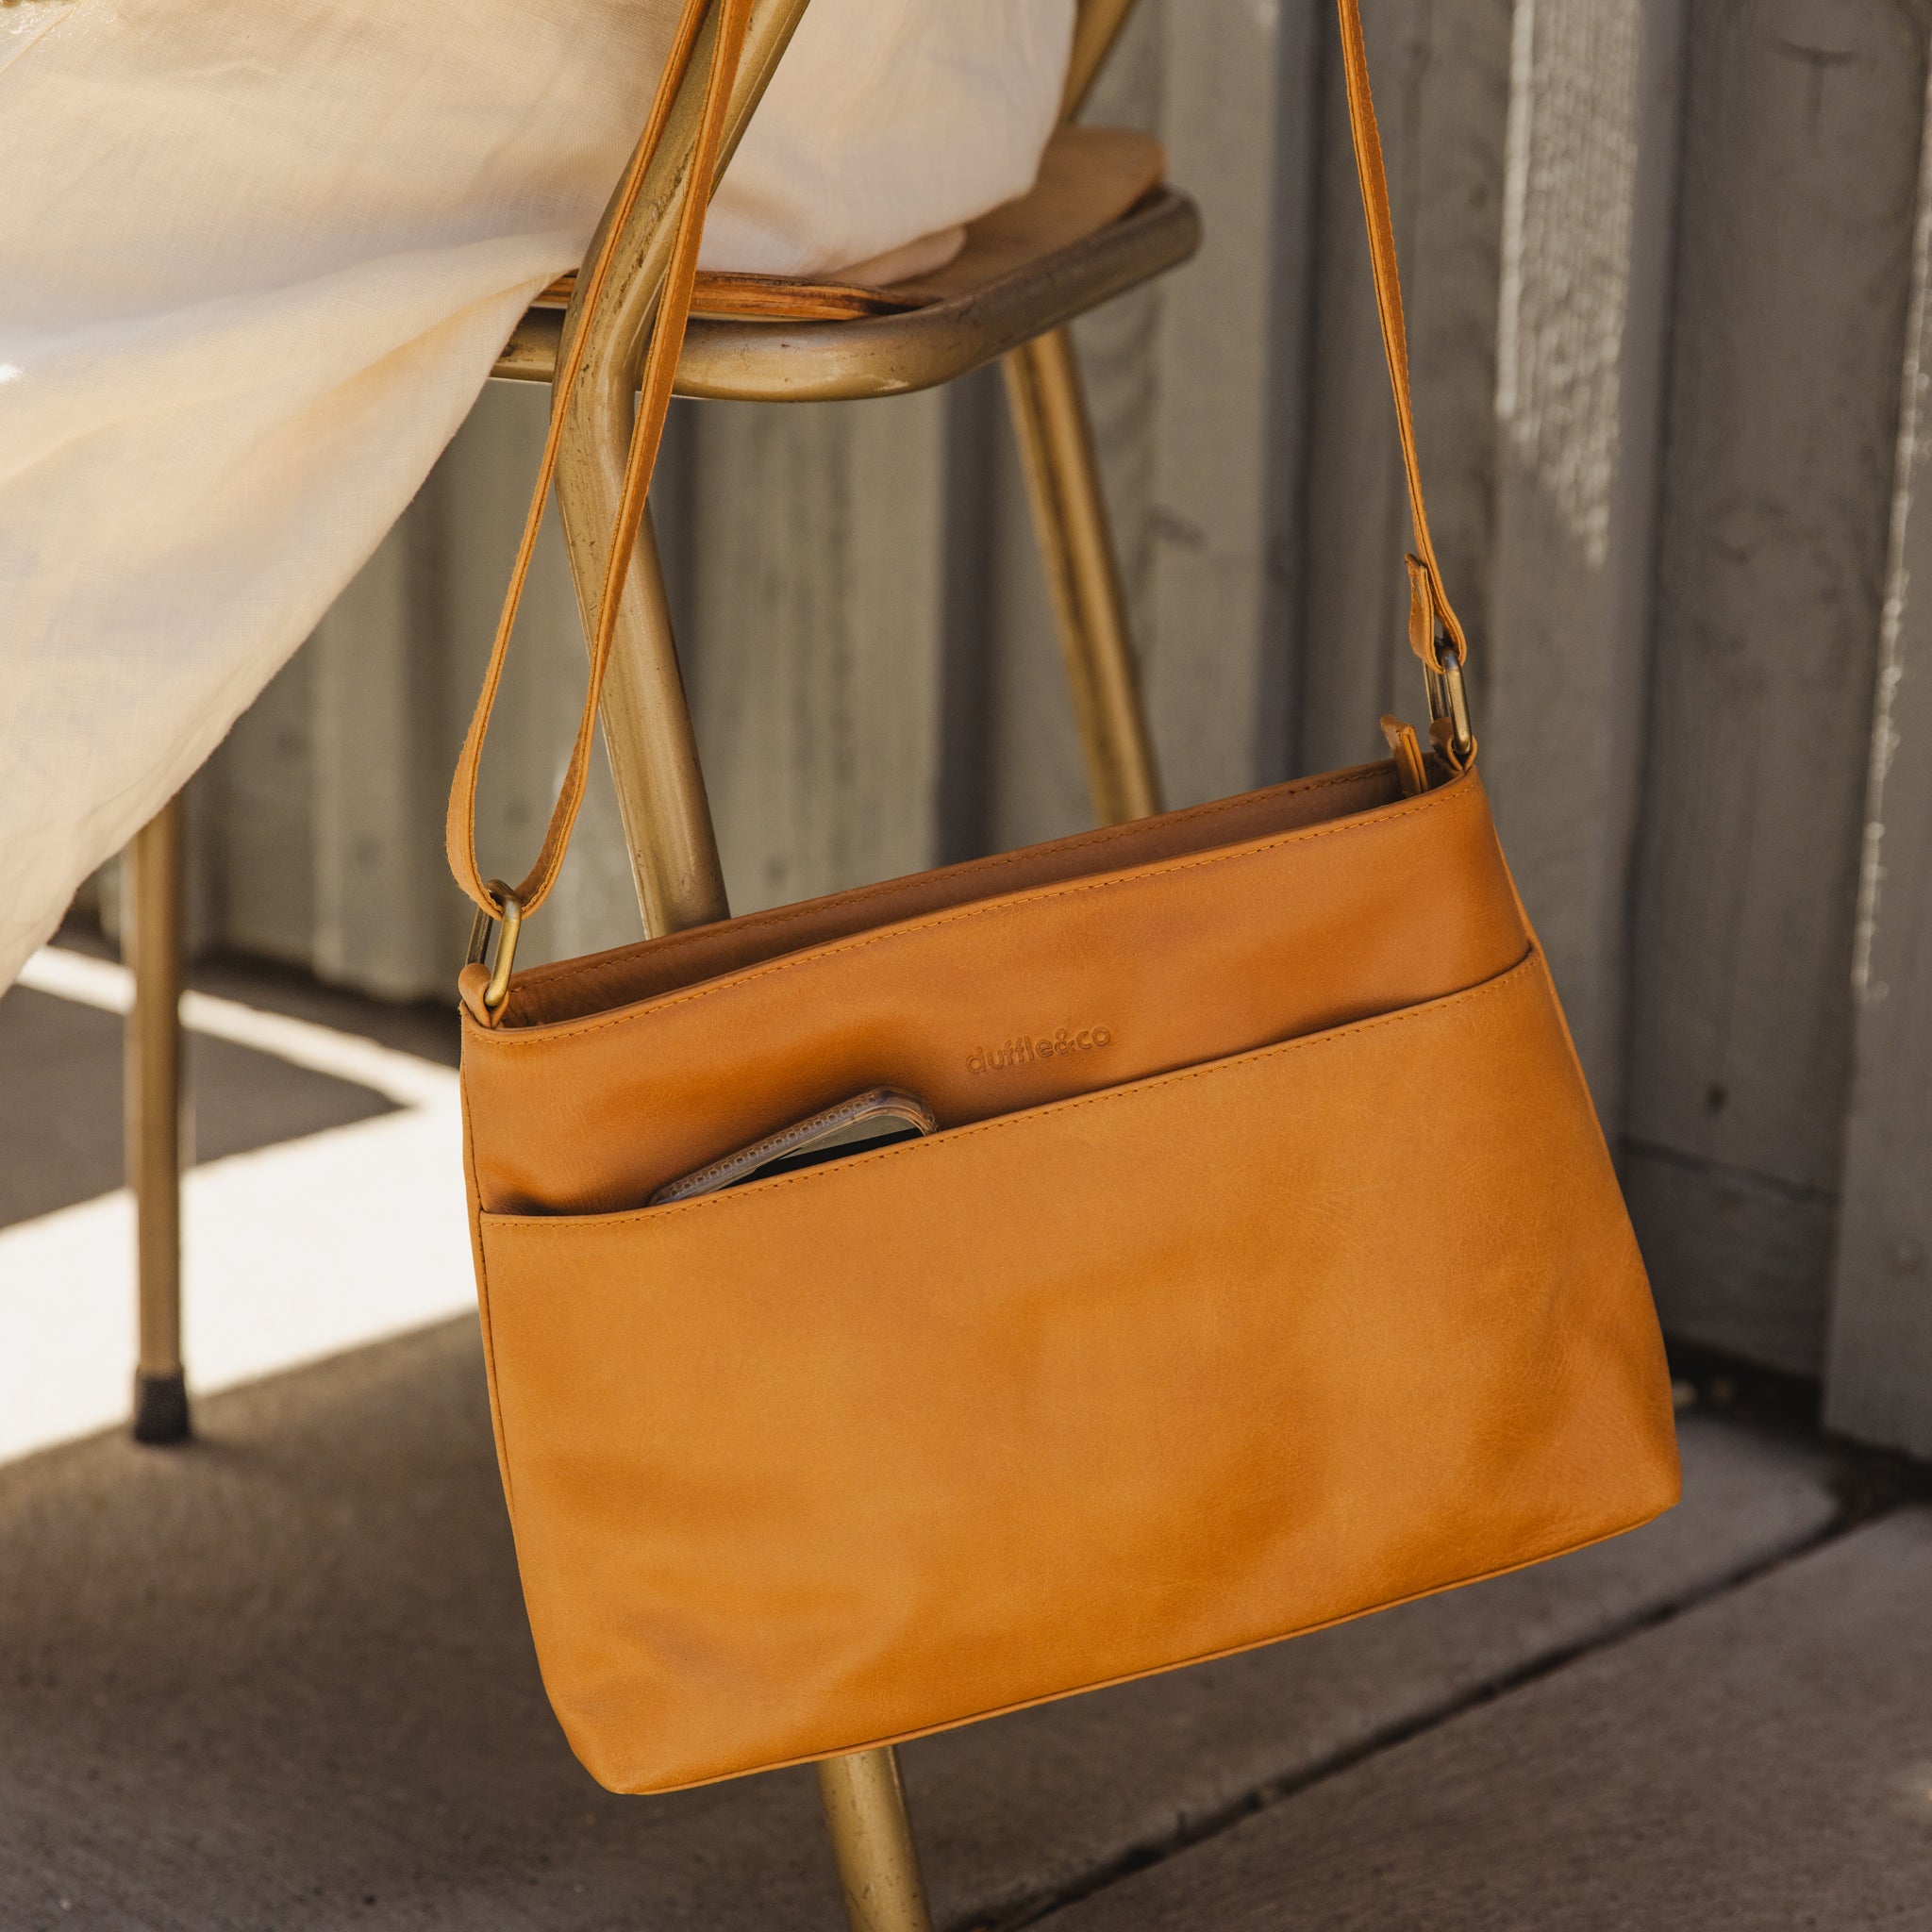 Tan Leather Rose Crossbody Handbag by Duffle&Co